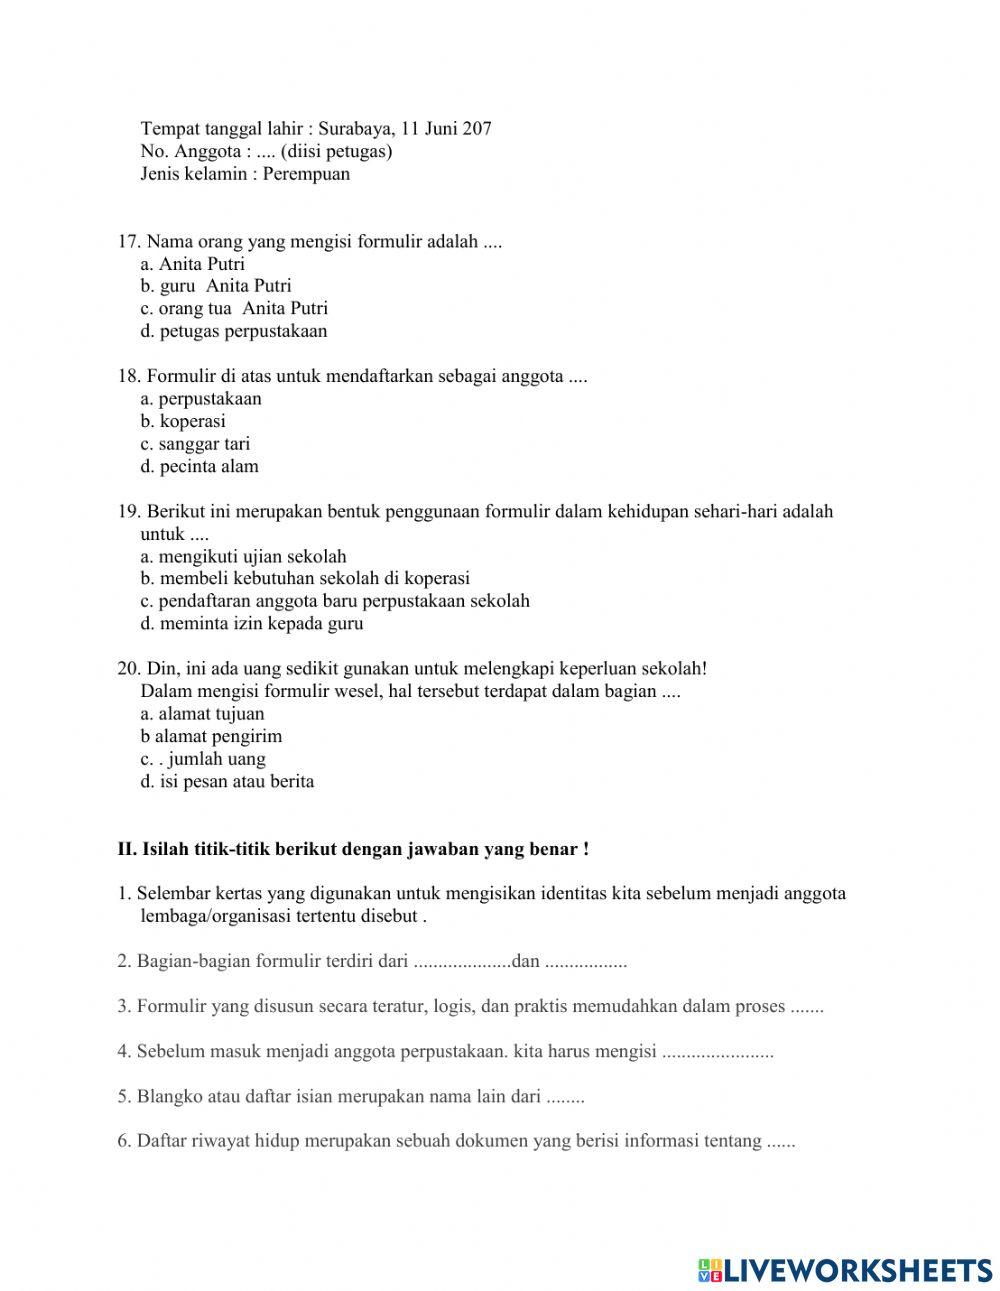 Soal ujian tema 5 bahasa indonesia